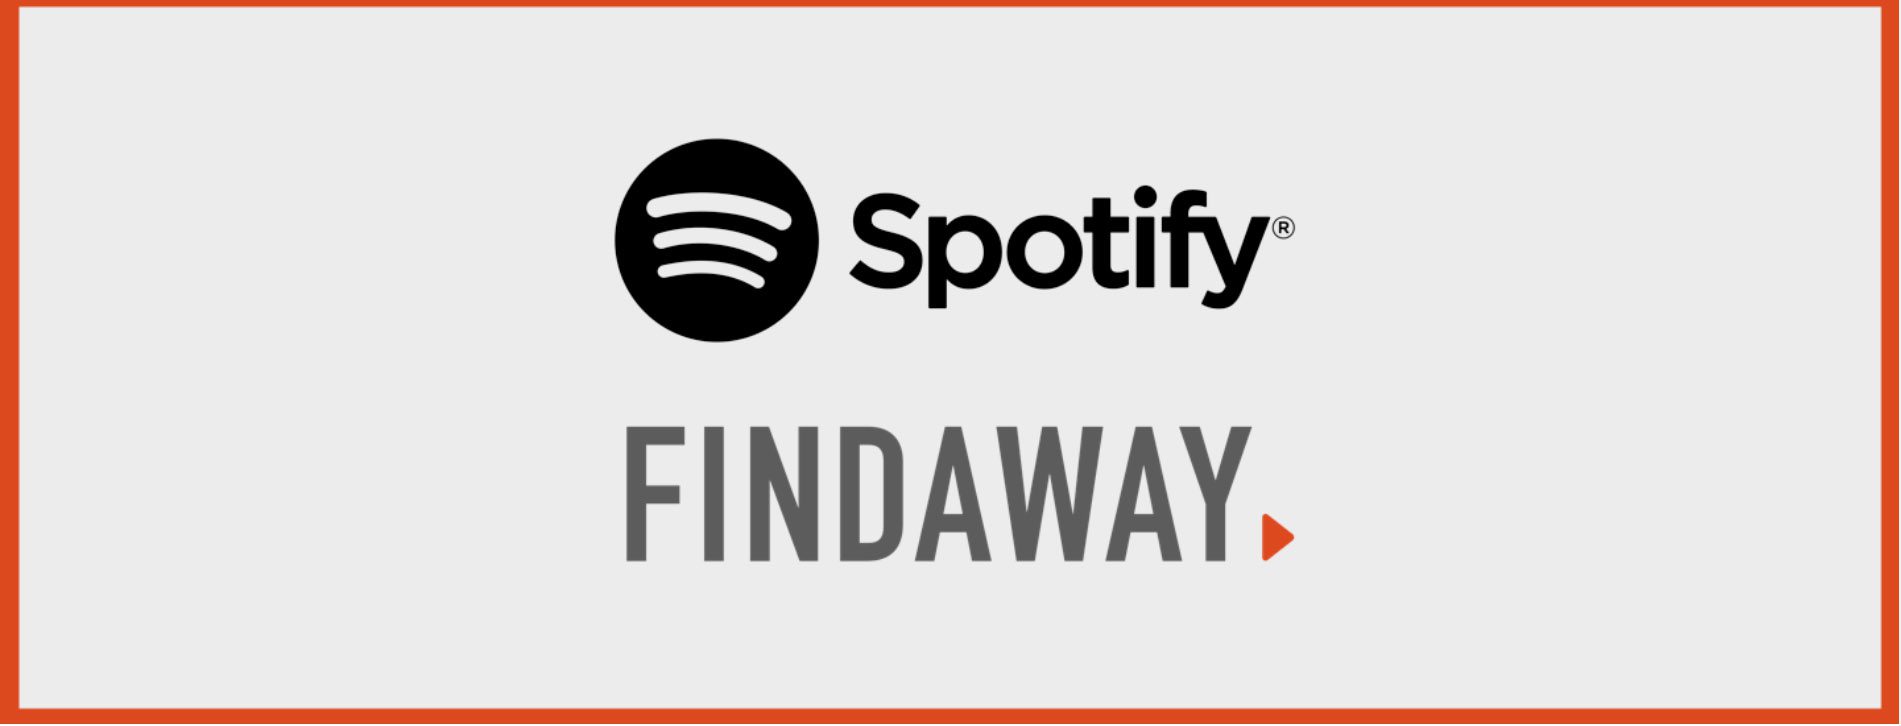 Spotify; Findaway